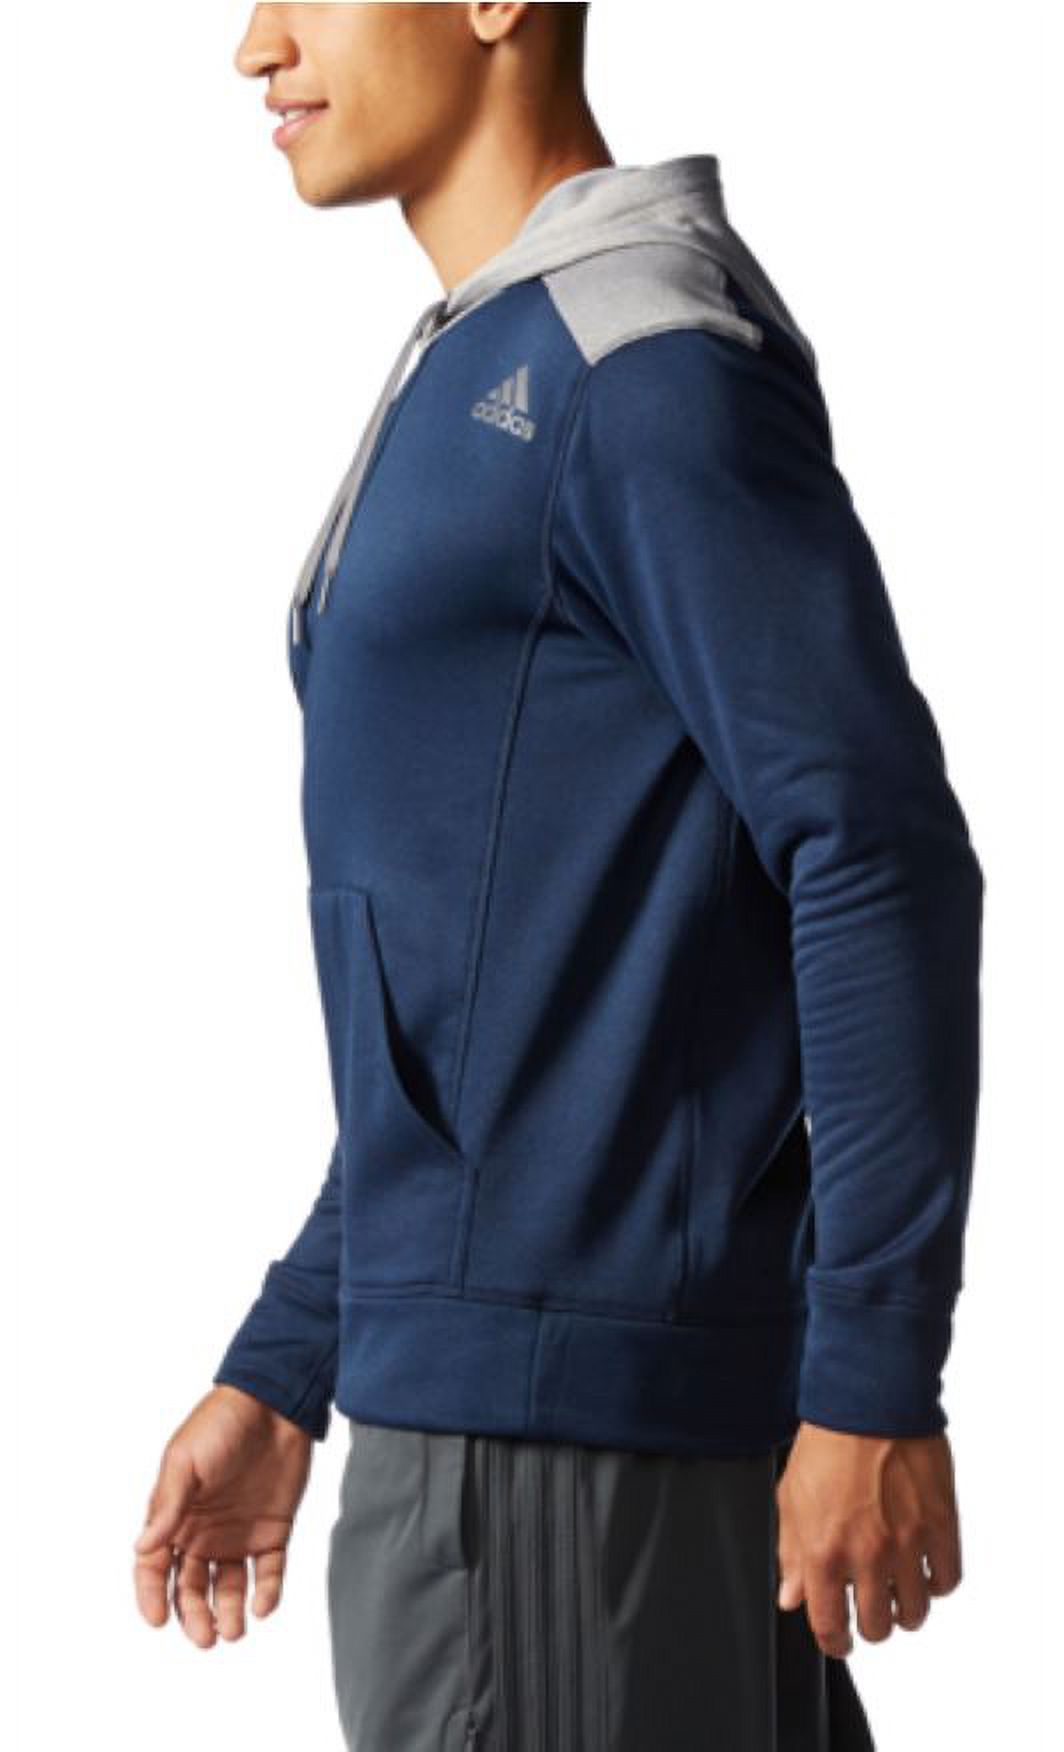 Adidas Mens Climawarm Tech Fleece Pullover Hoodie Sweatshirt - image 4 of 4